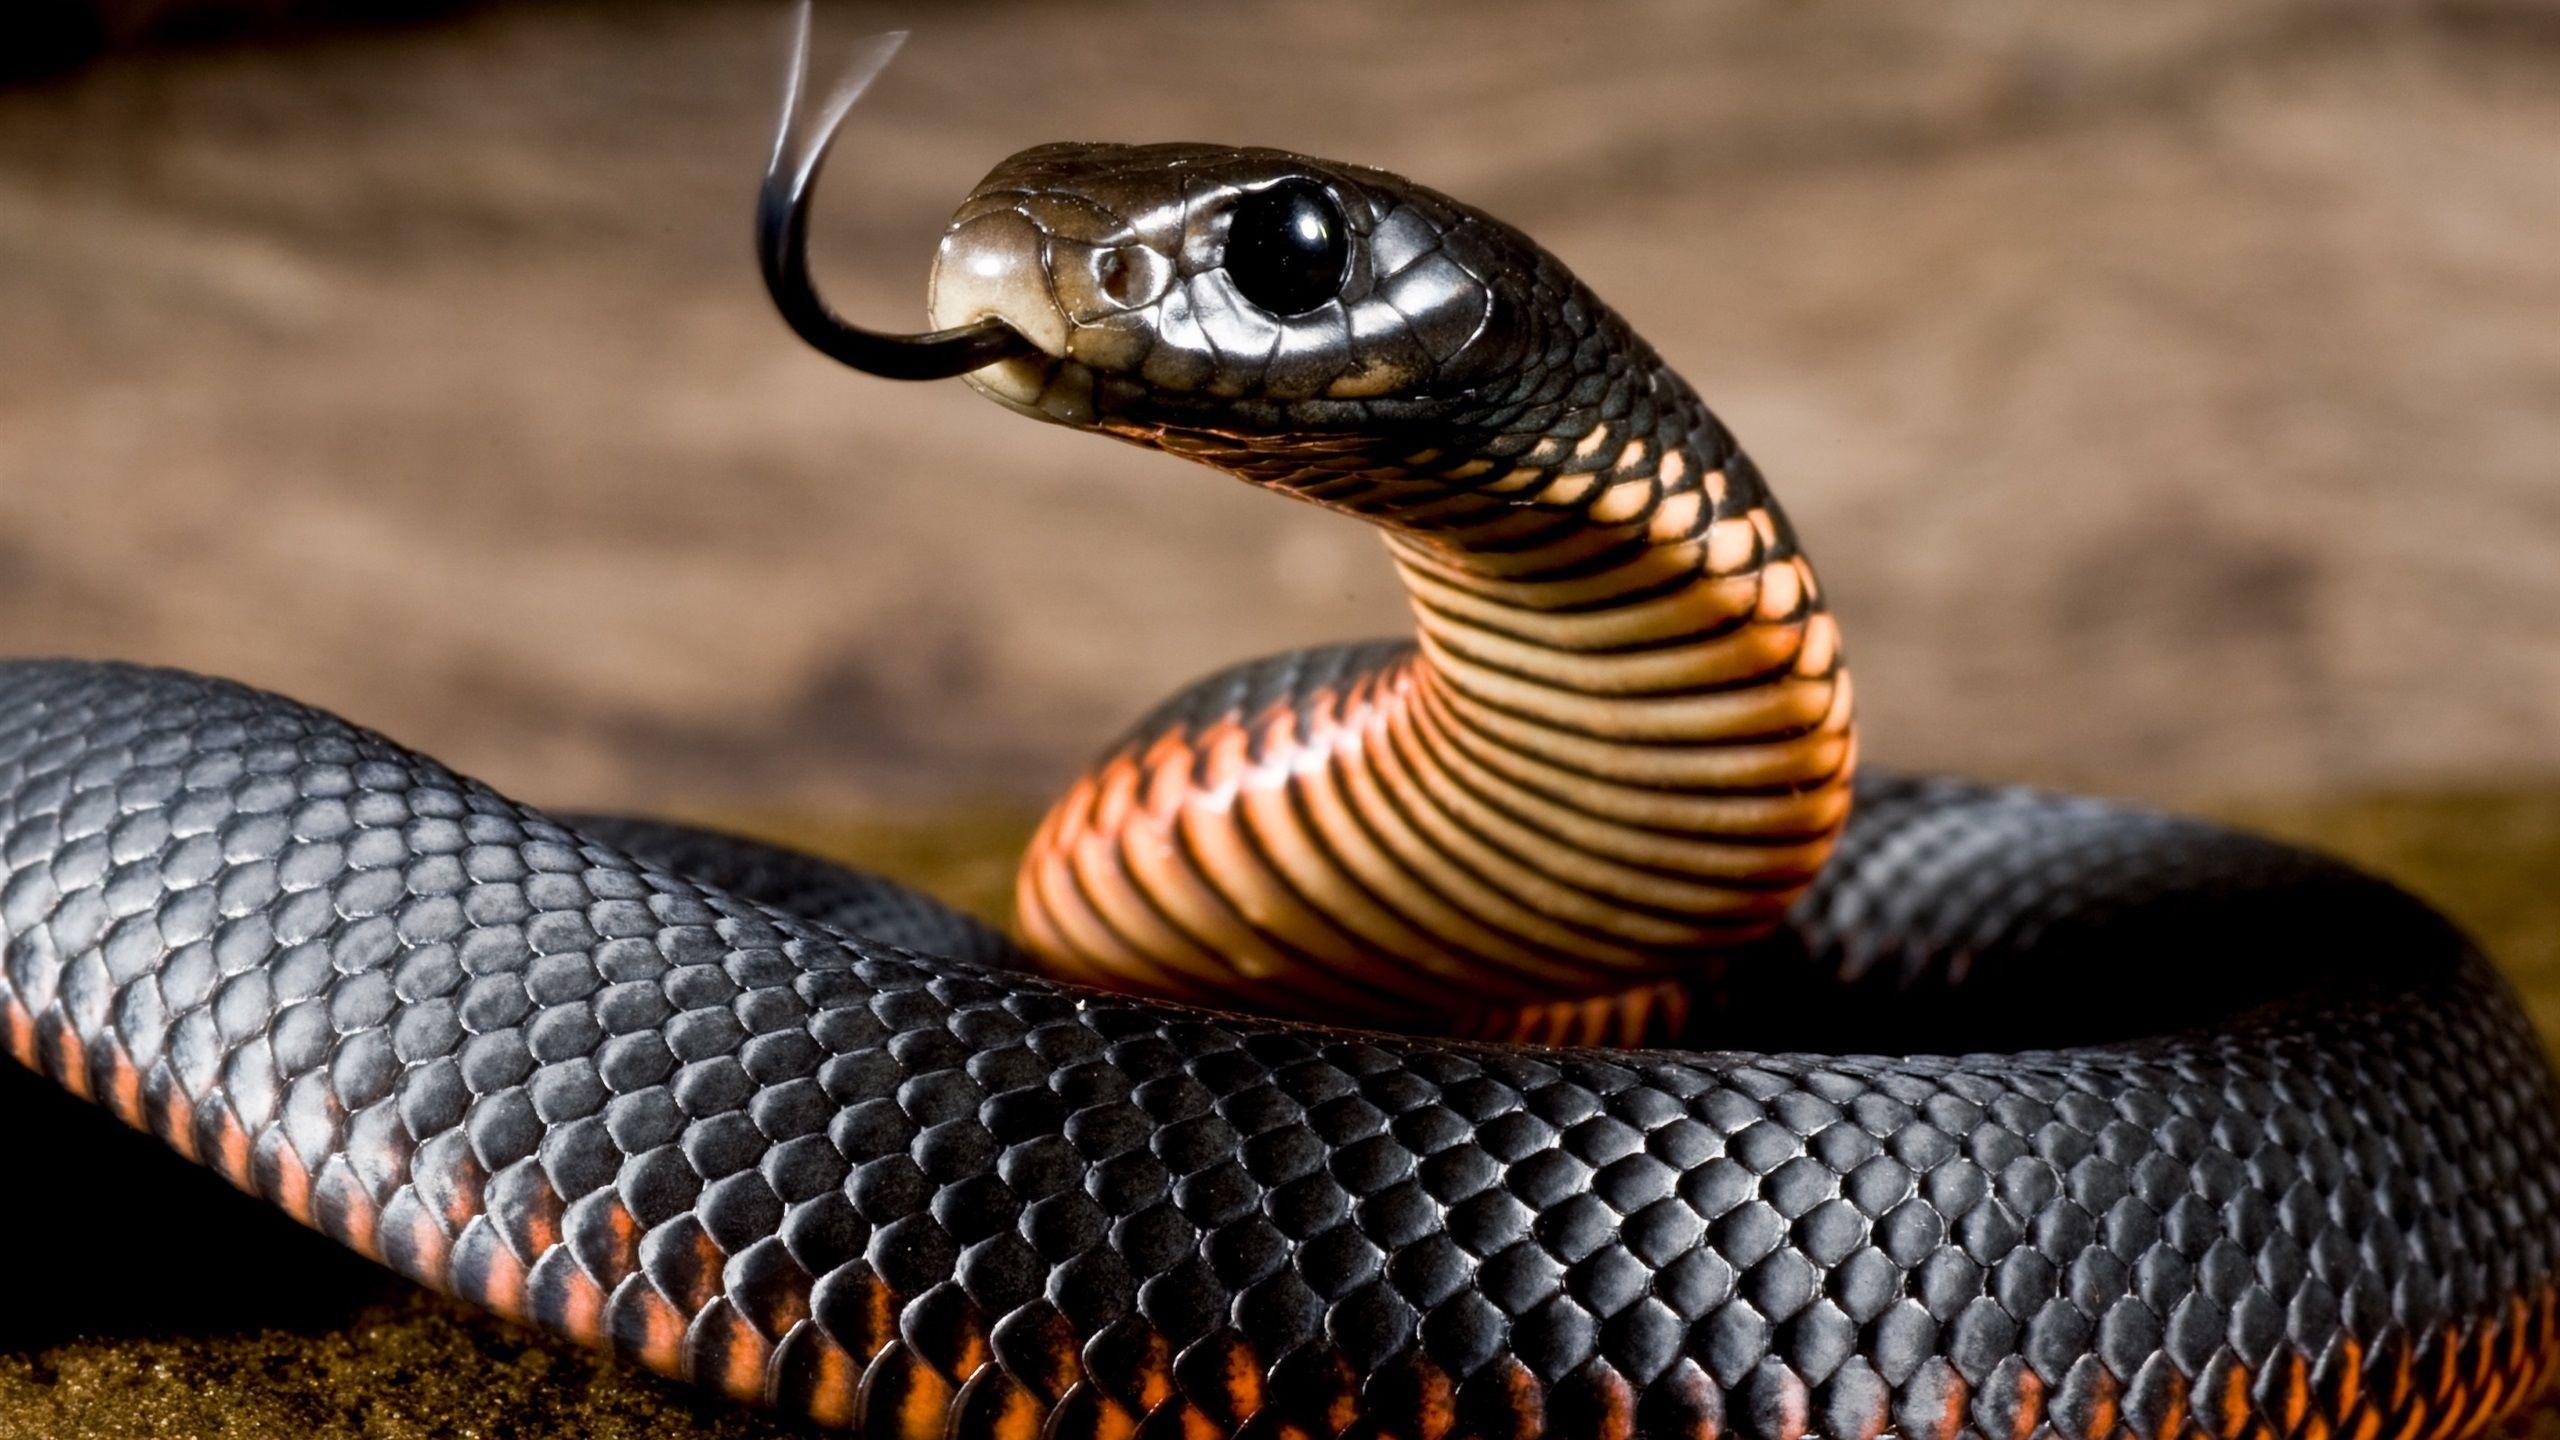 Black Snake HD Wallpapers - Top Free Black Snake HD ...